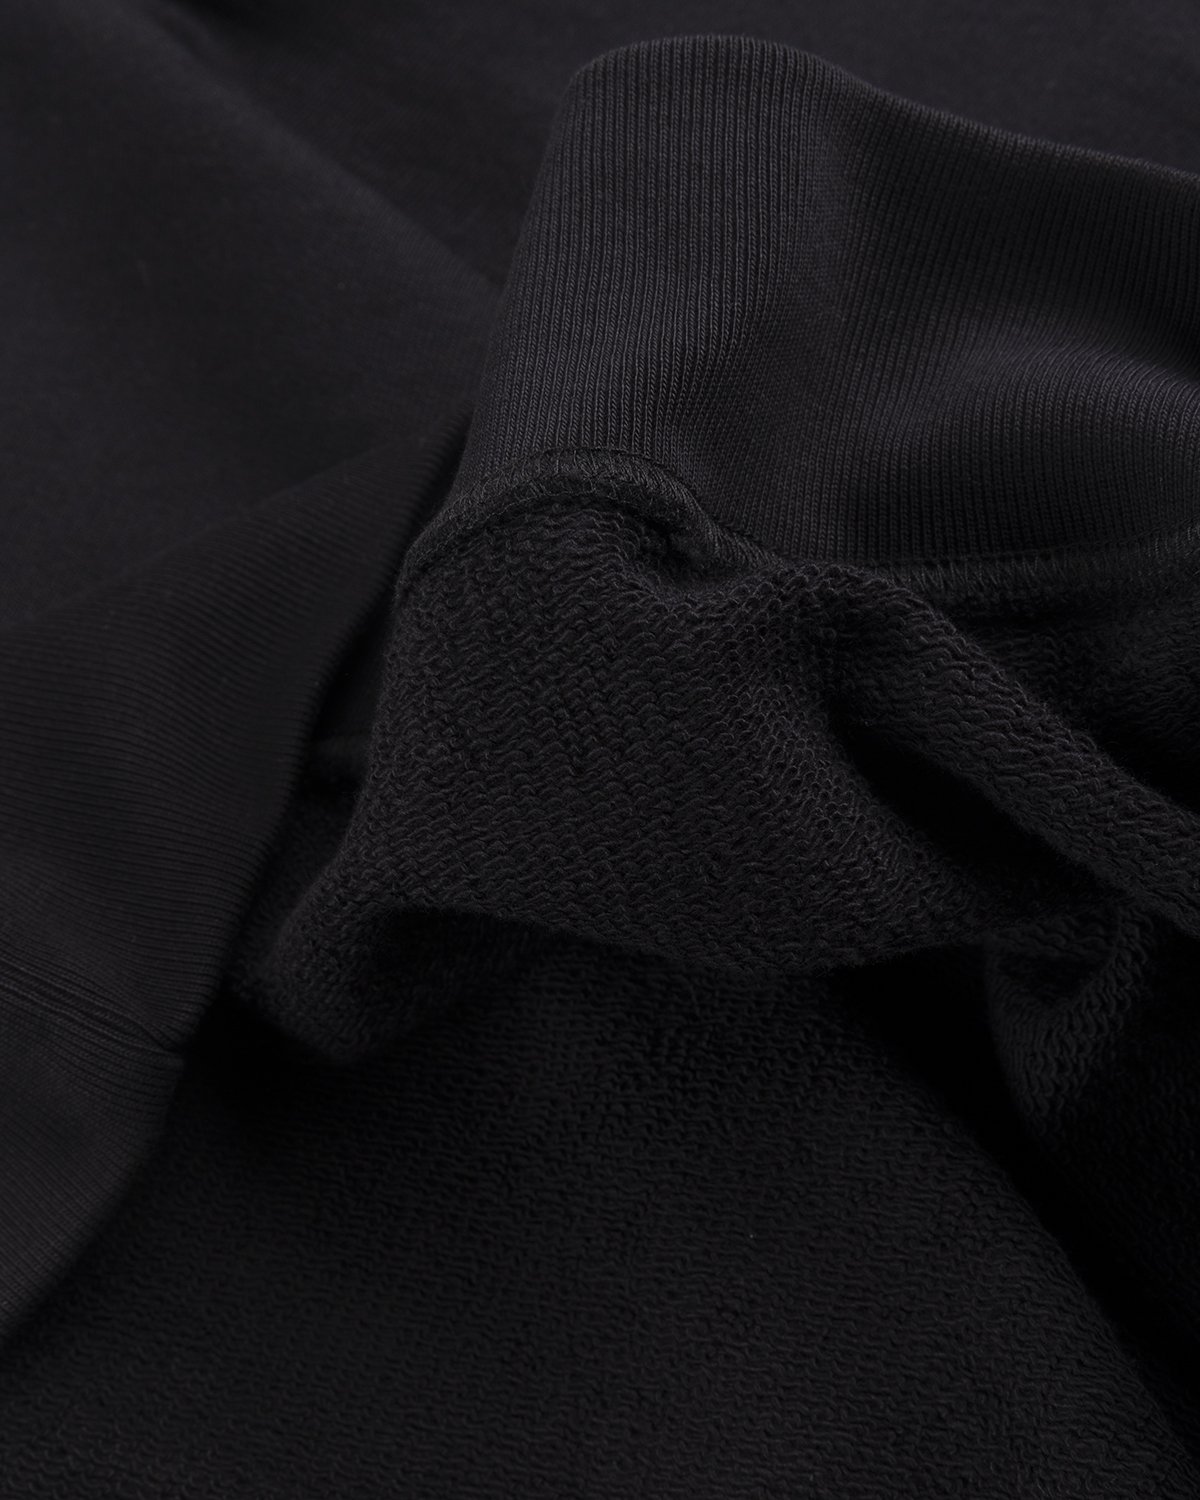 Dries van Noten - Haf Crewneck Sweater Black - Clothing - Black - Image 4